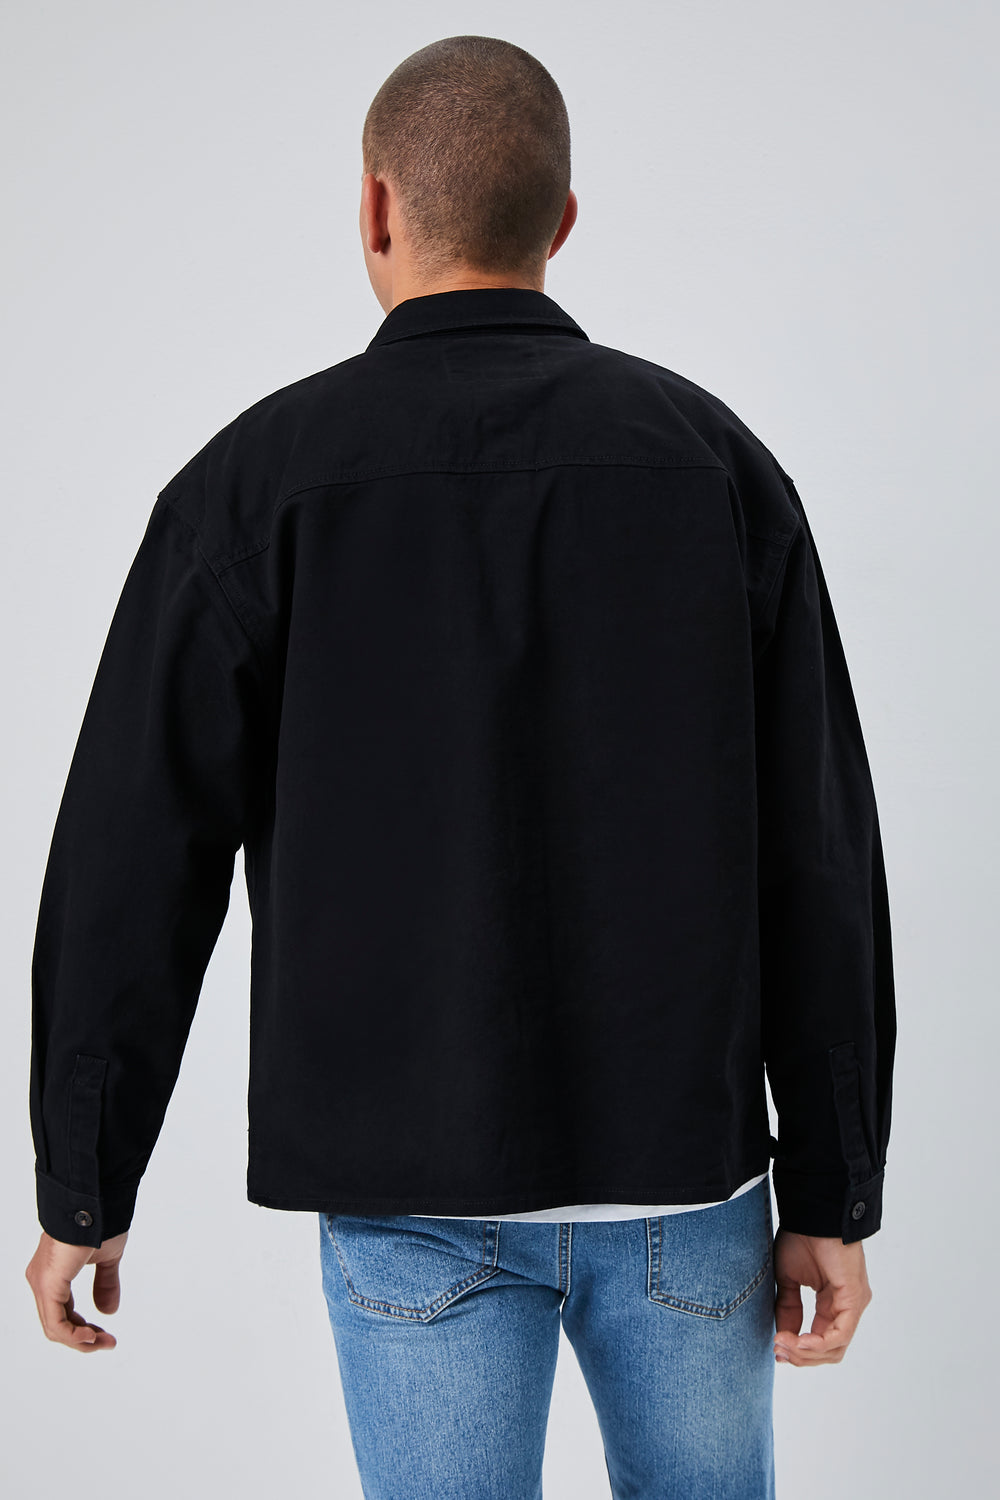 Drop-Sleeve Button Jacket Black